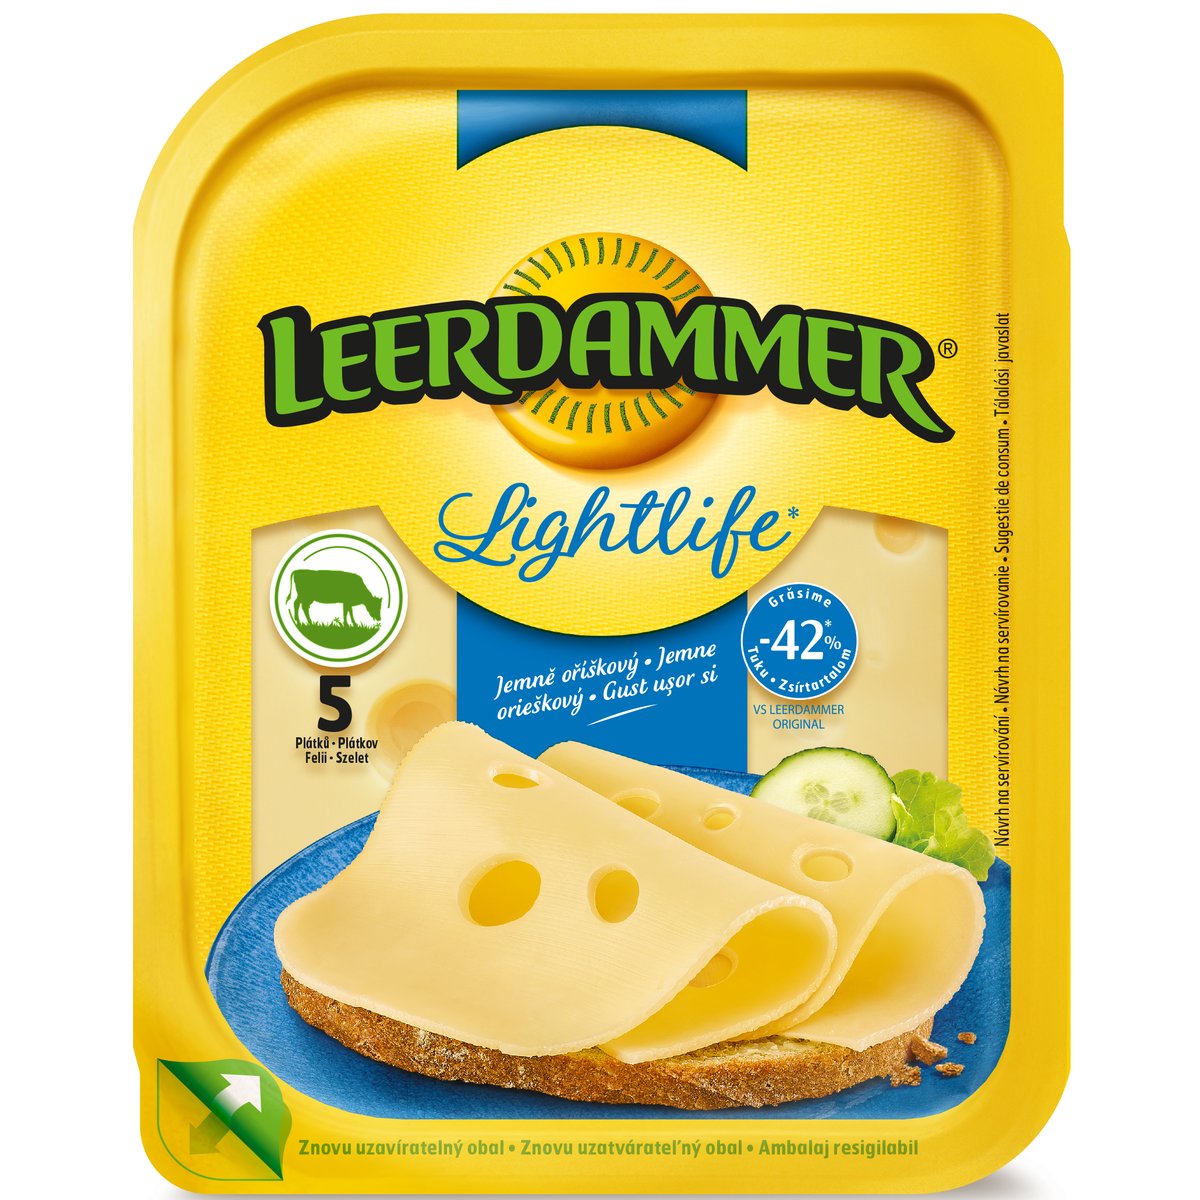 Leerdammer Lightlife sýr plátky